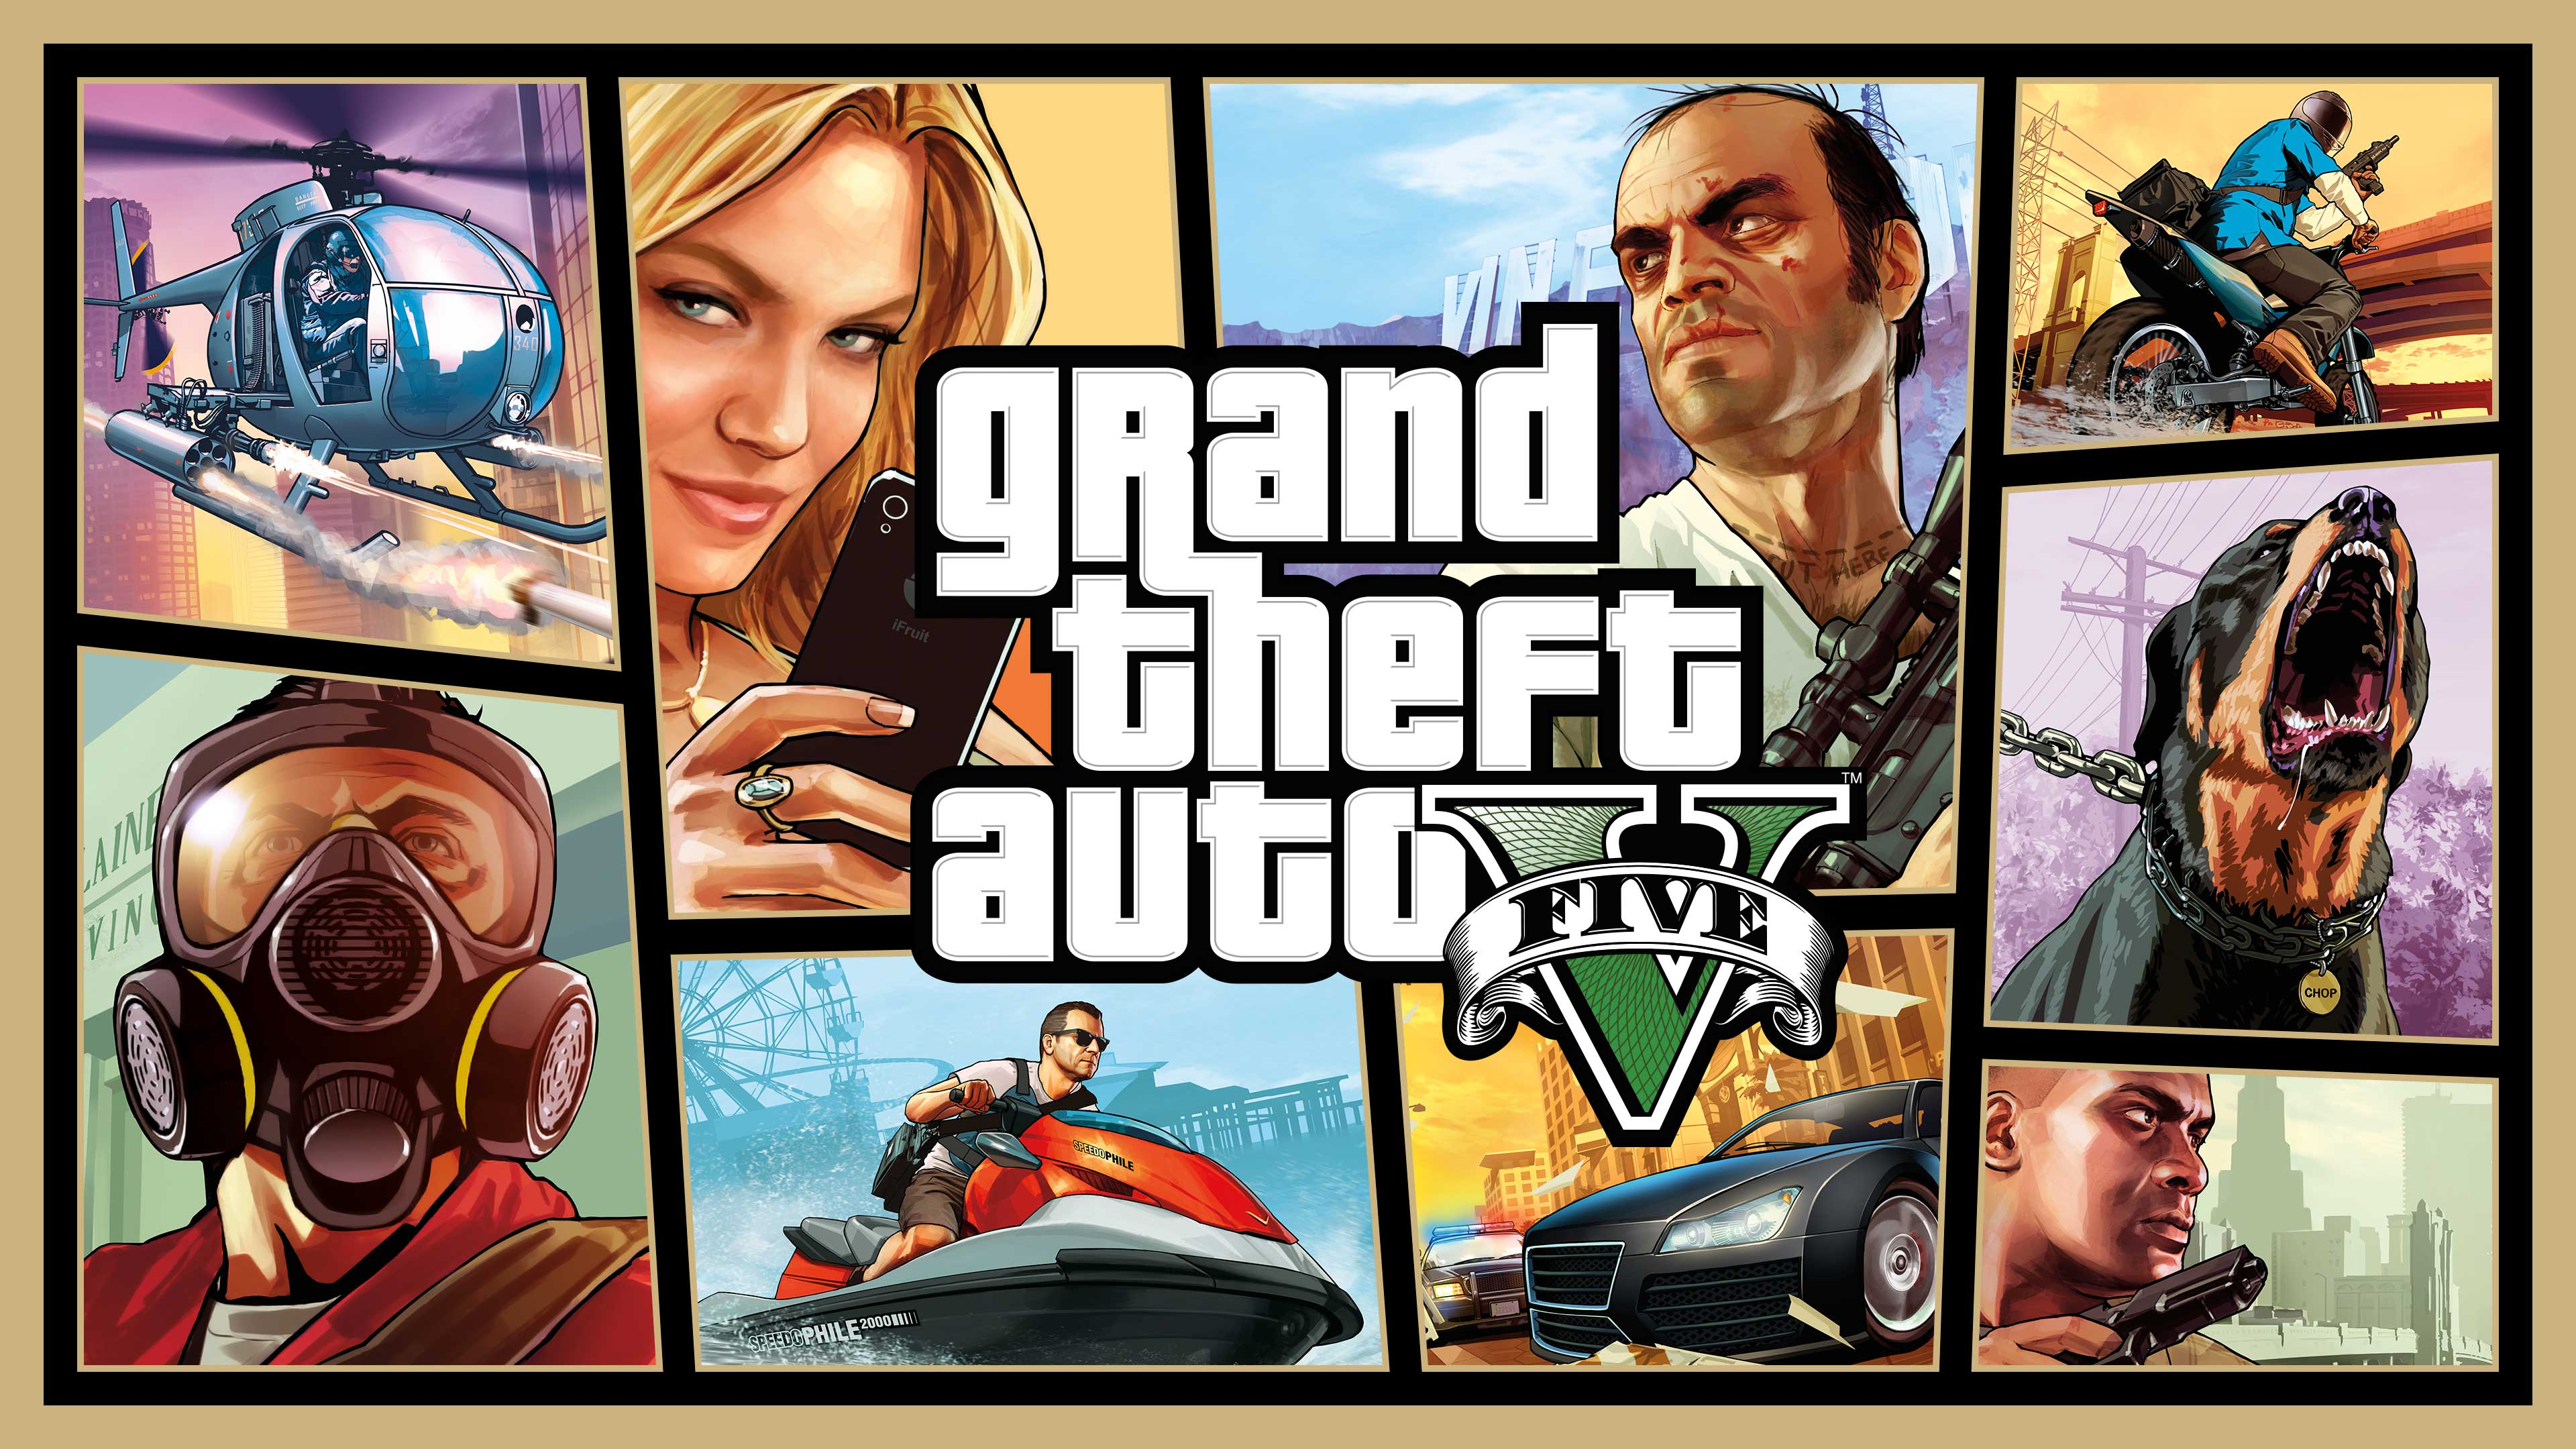 Grand Theft Auto V - Rockstar Games Customer Support